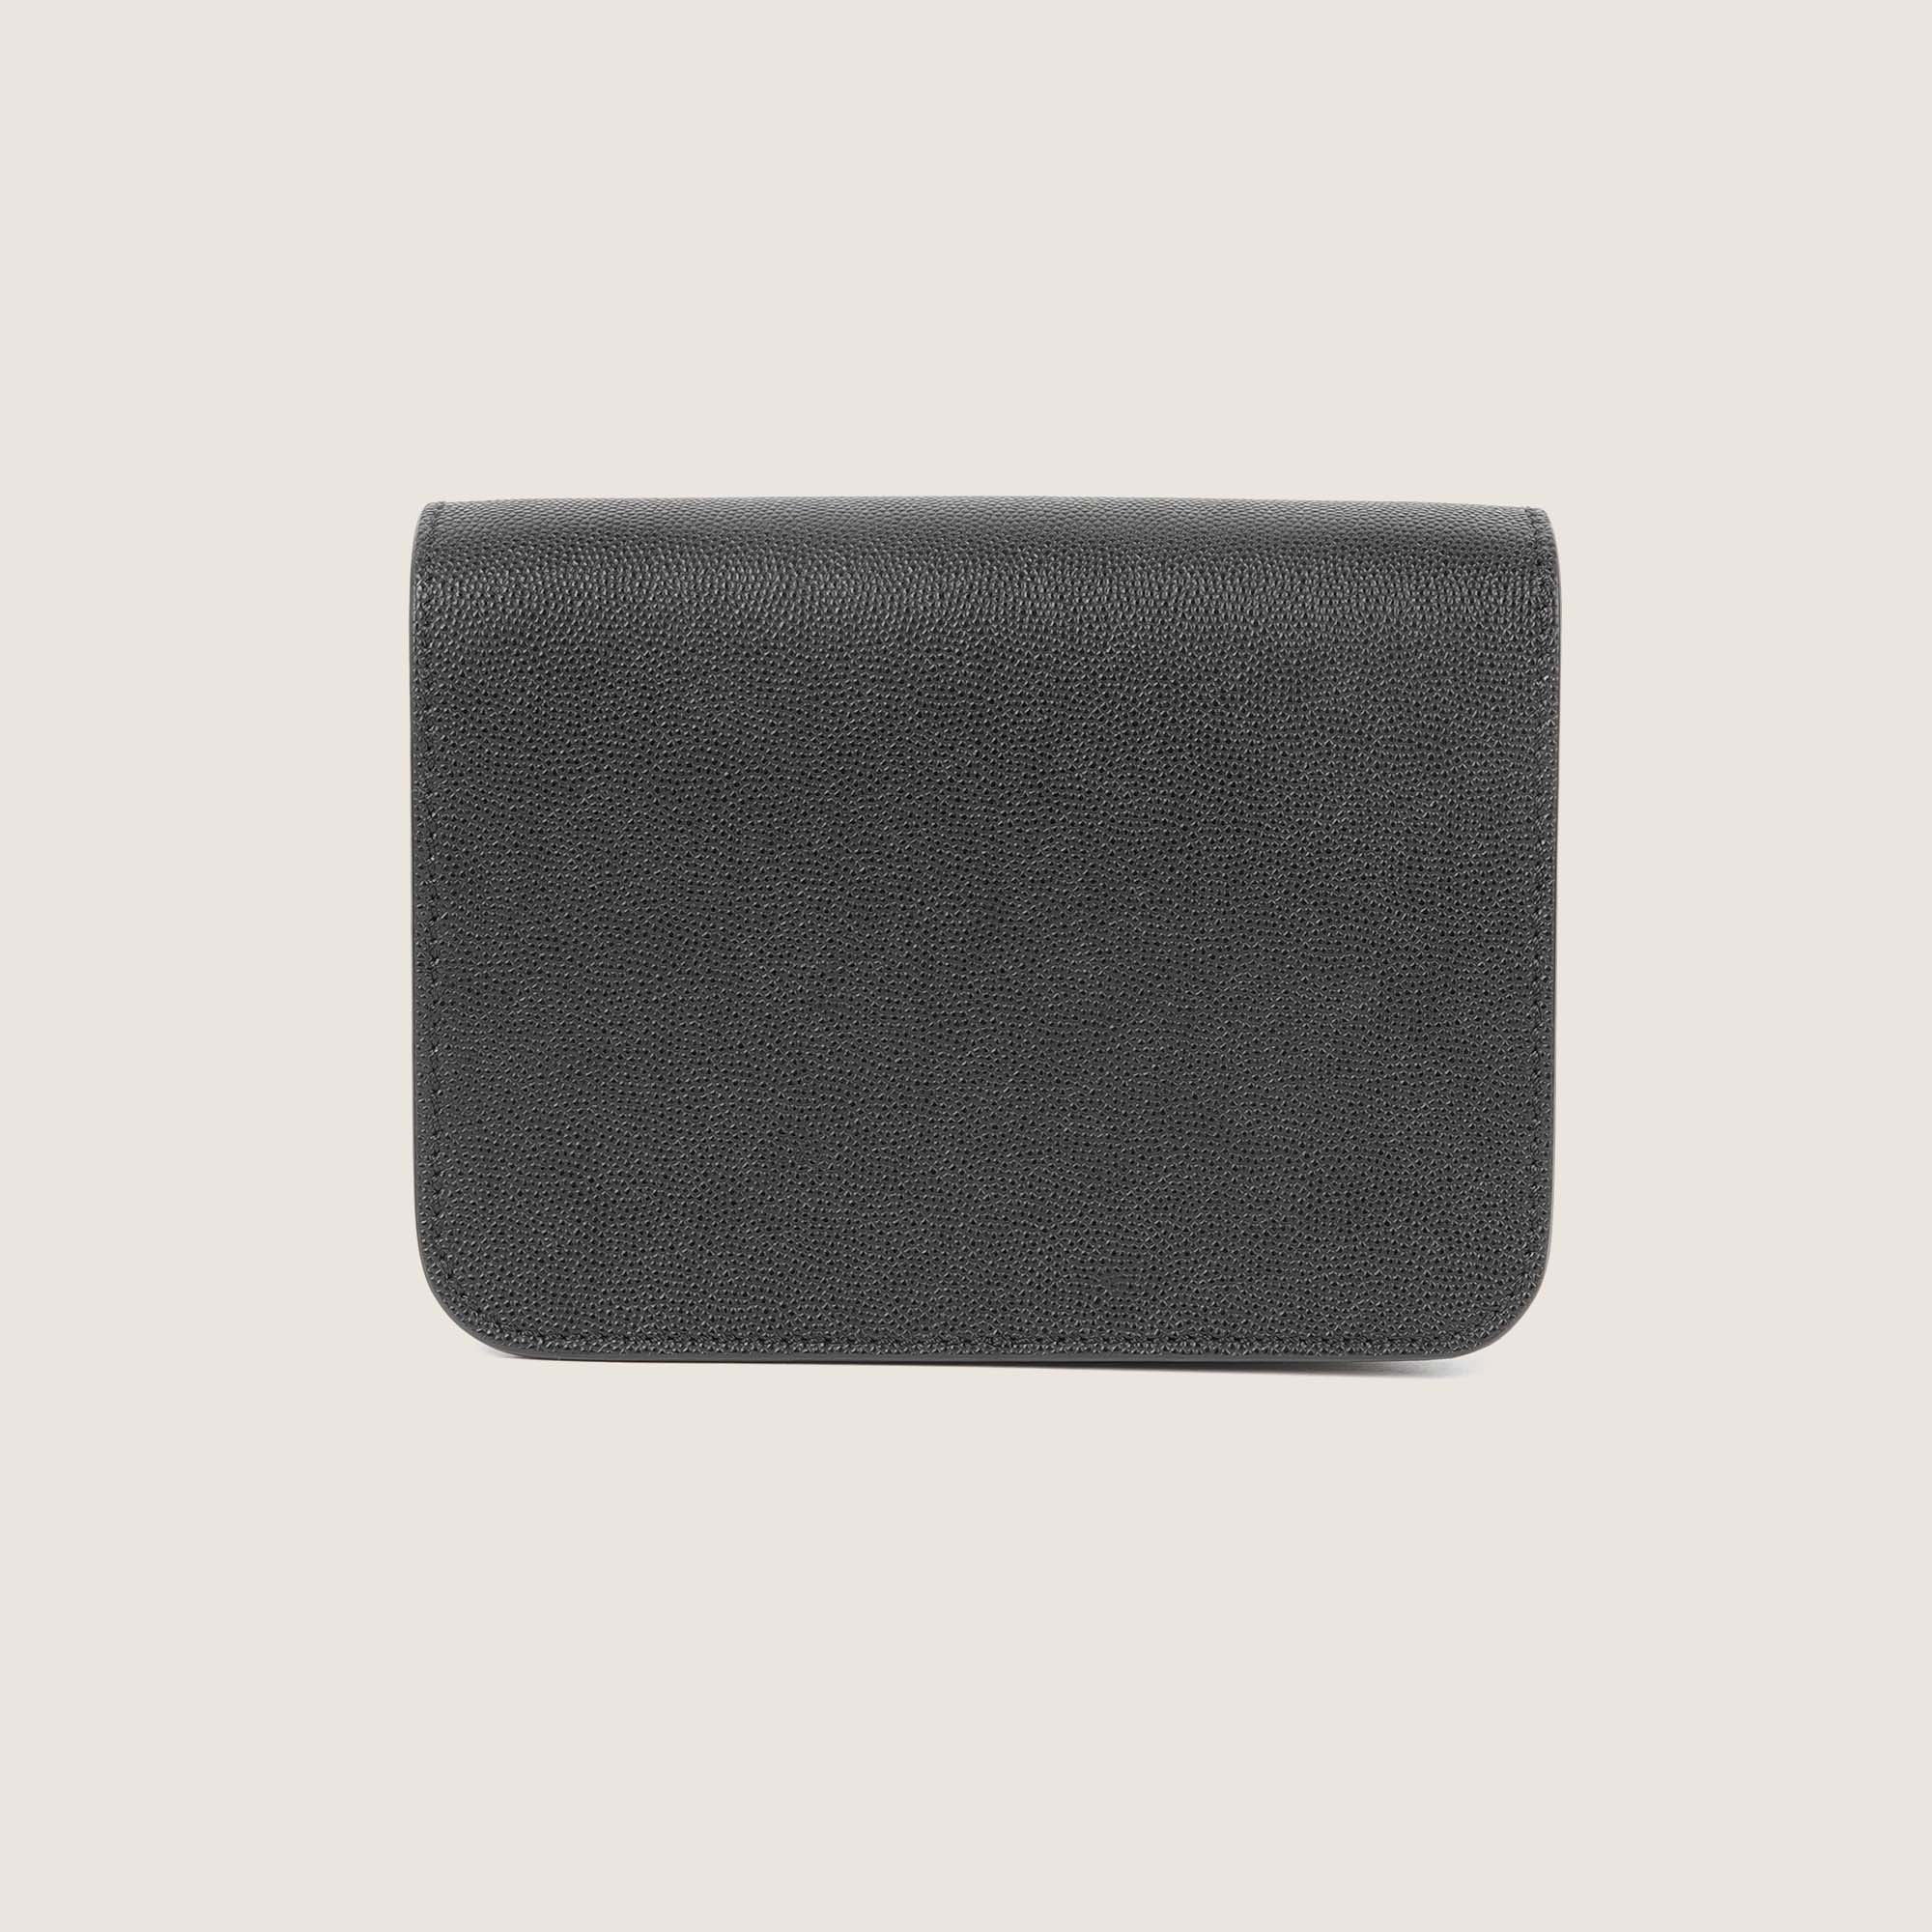 TB Mini Shoulder Bag - BURBERRY - Affordable Luxury image